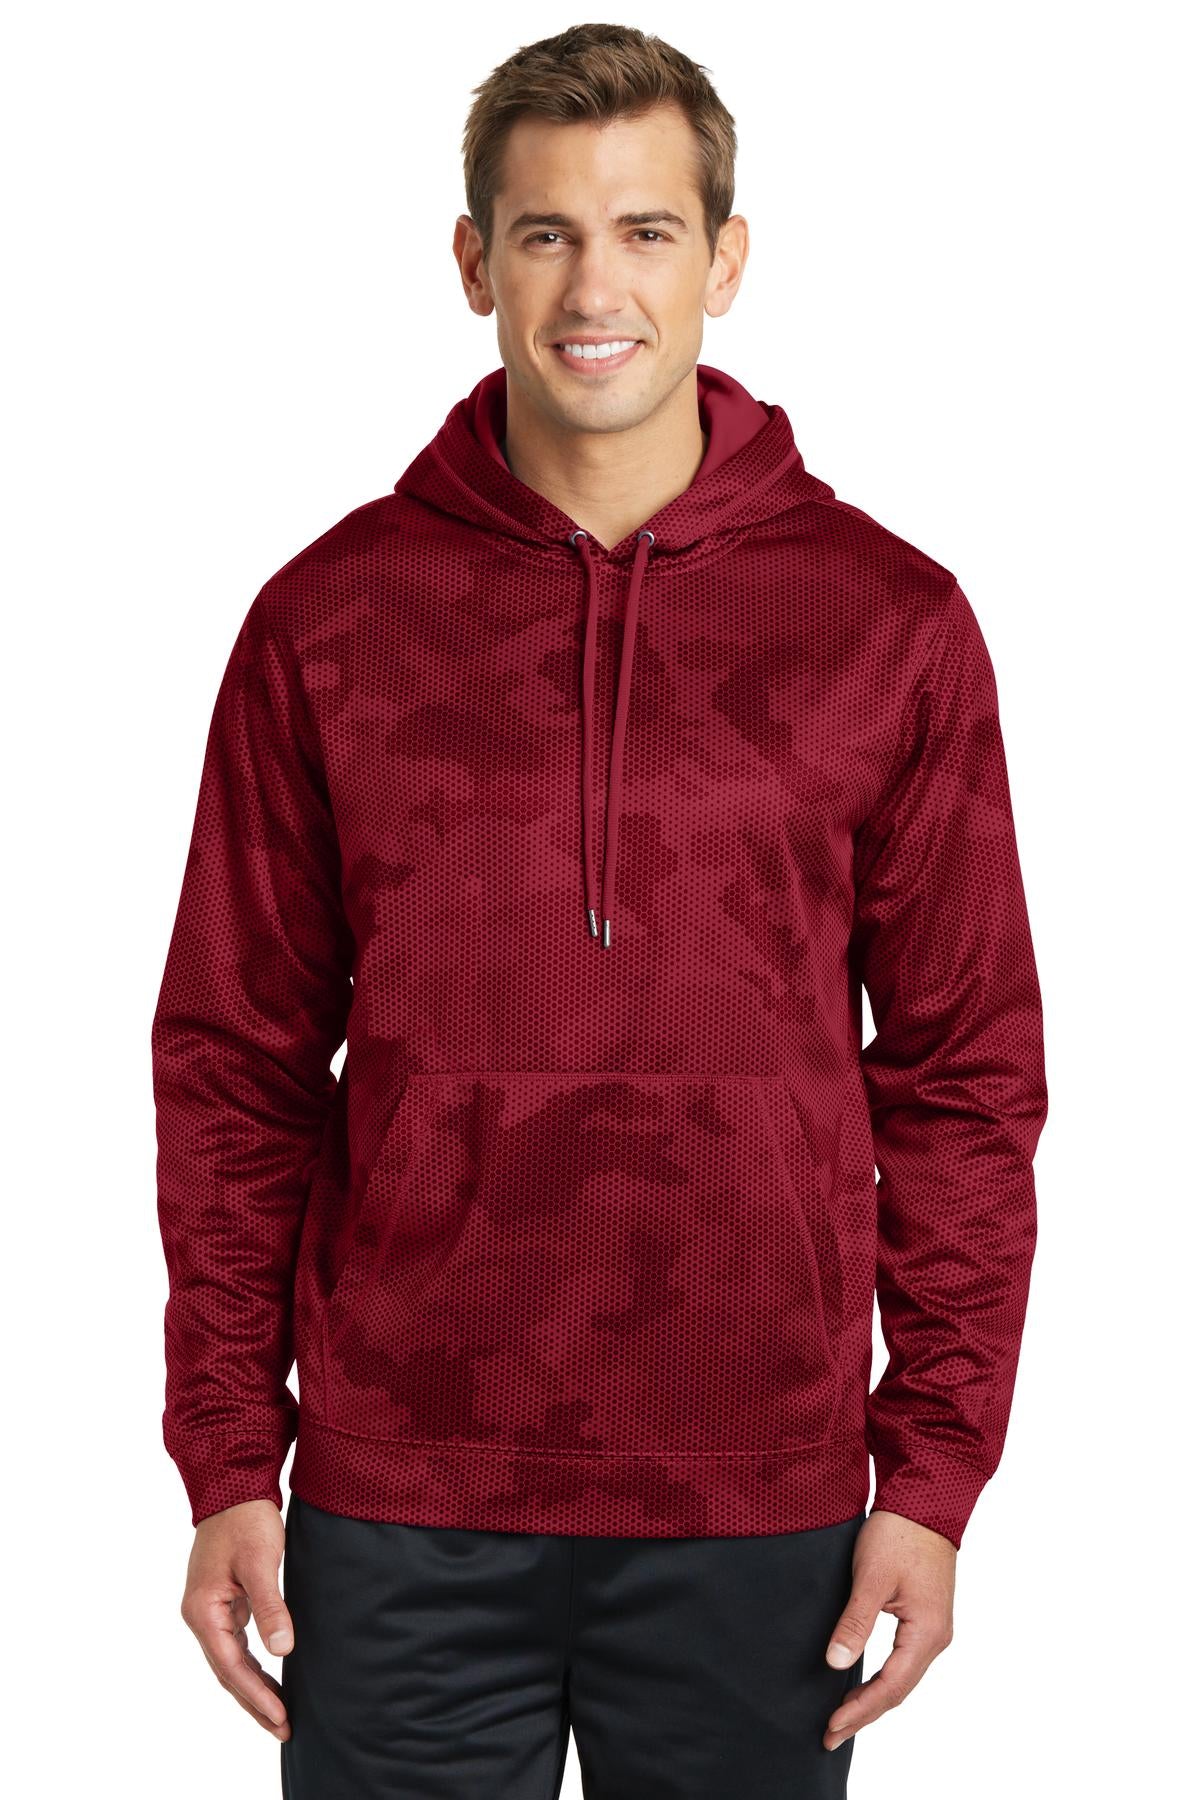 Sublimated Hooded Fleece Sweatshirt - Smack Sportswear